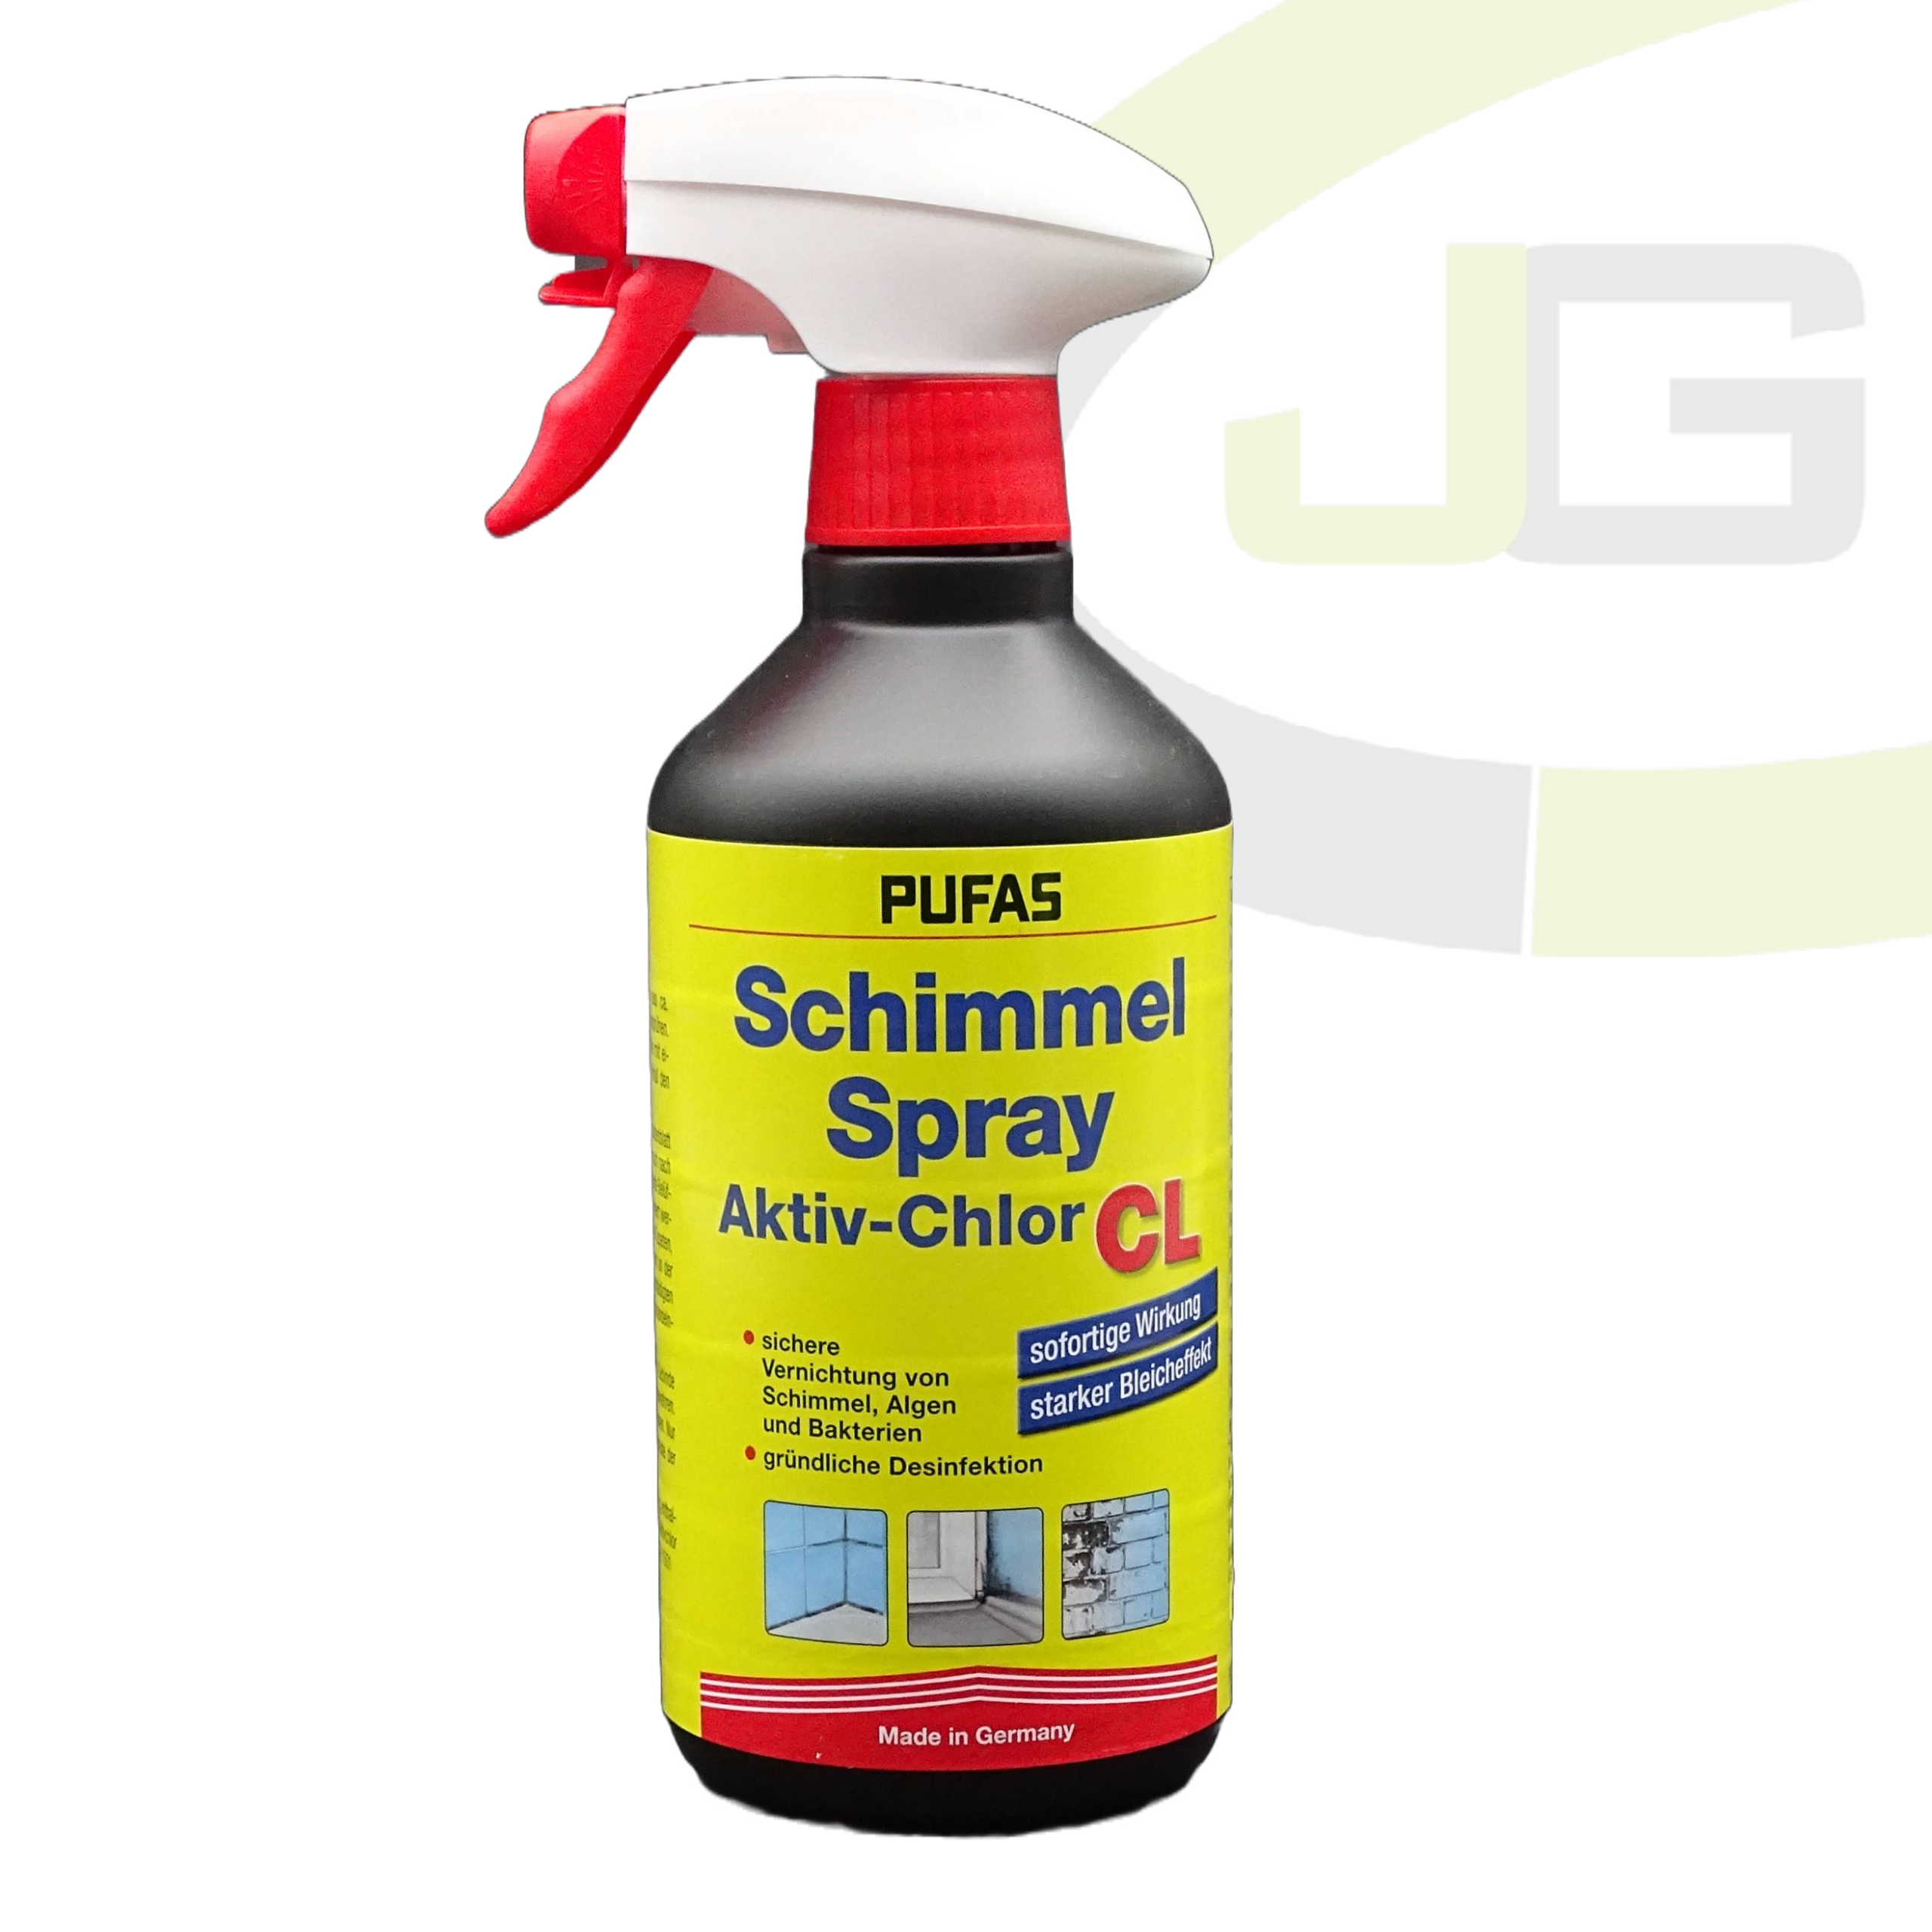 Pufas Schimmel-Sprayl Aktiv-Chlor CL - 500 ml